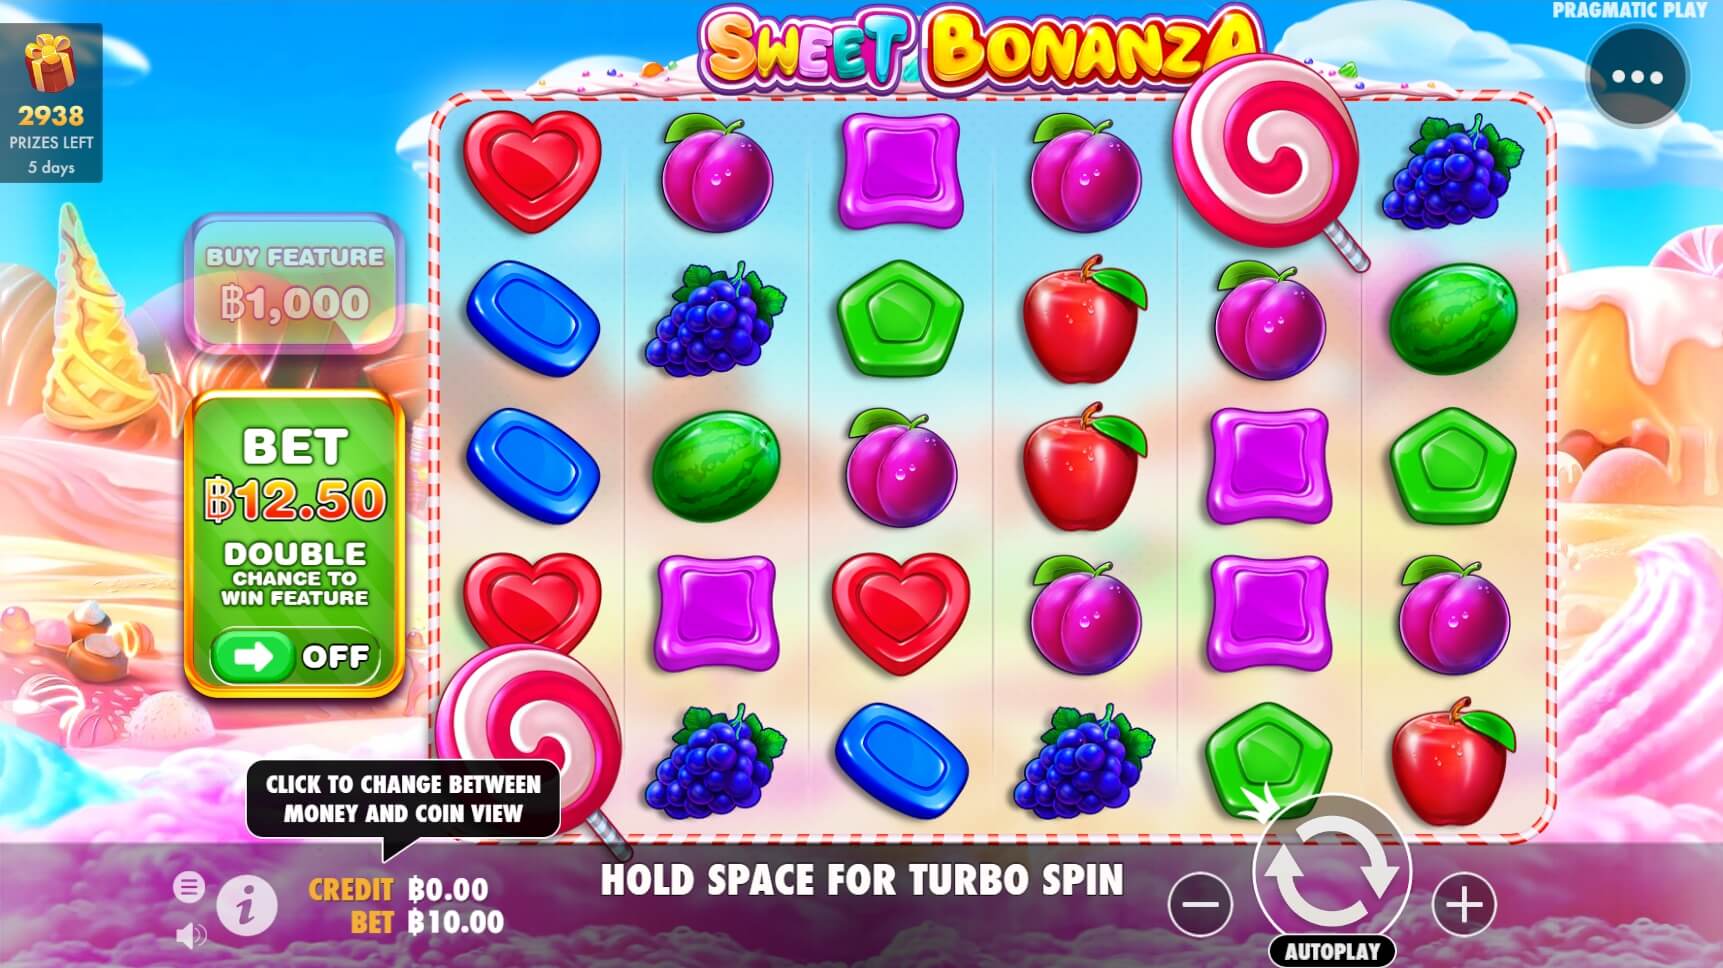 Sweet Bonanza Pragmatic Play slotxo auto